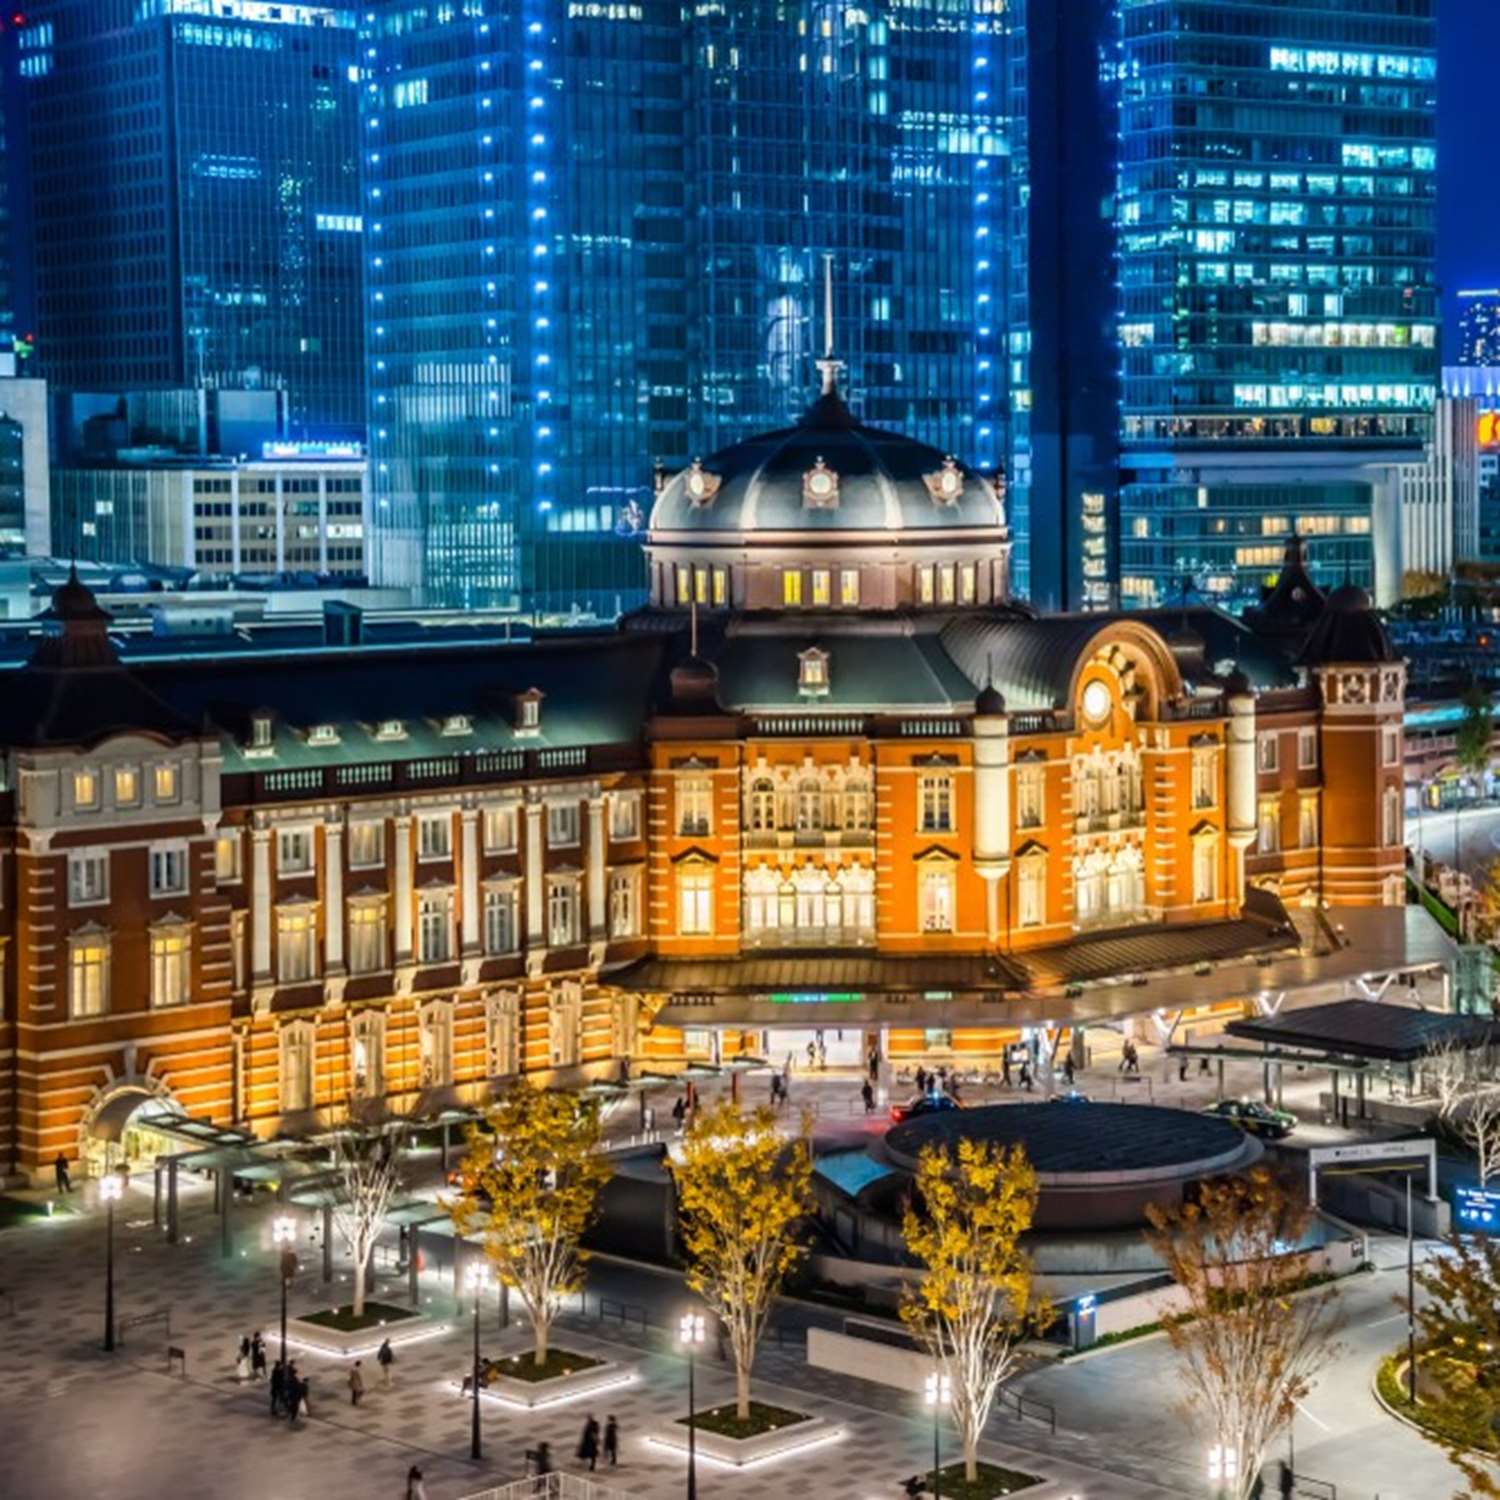 Photos: Marunouchi -A fashionable business district around Tokyo Station